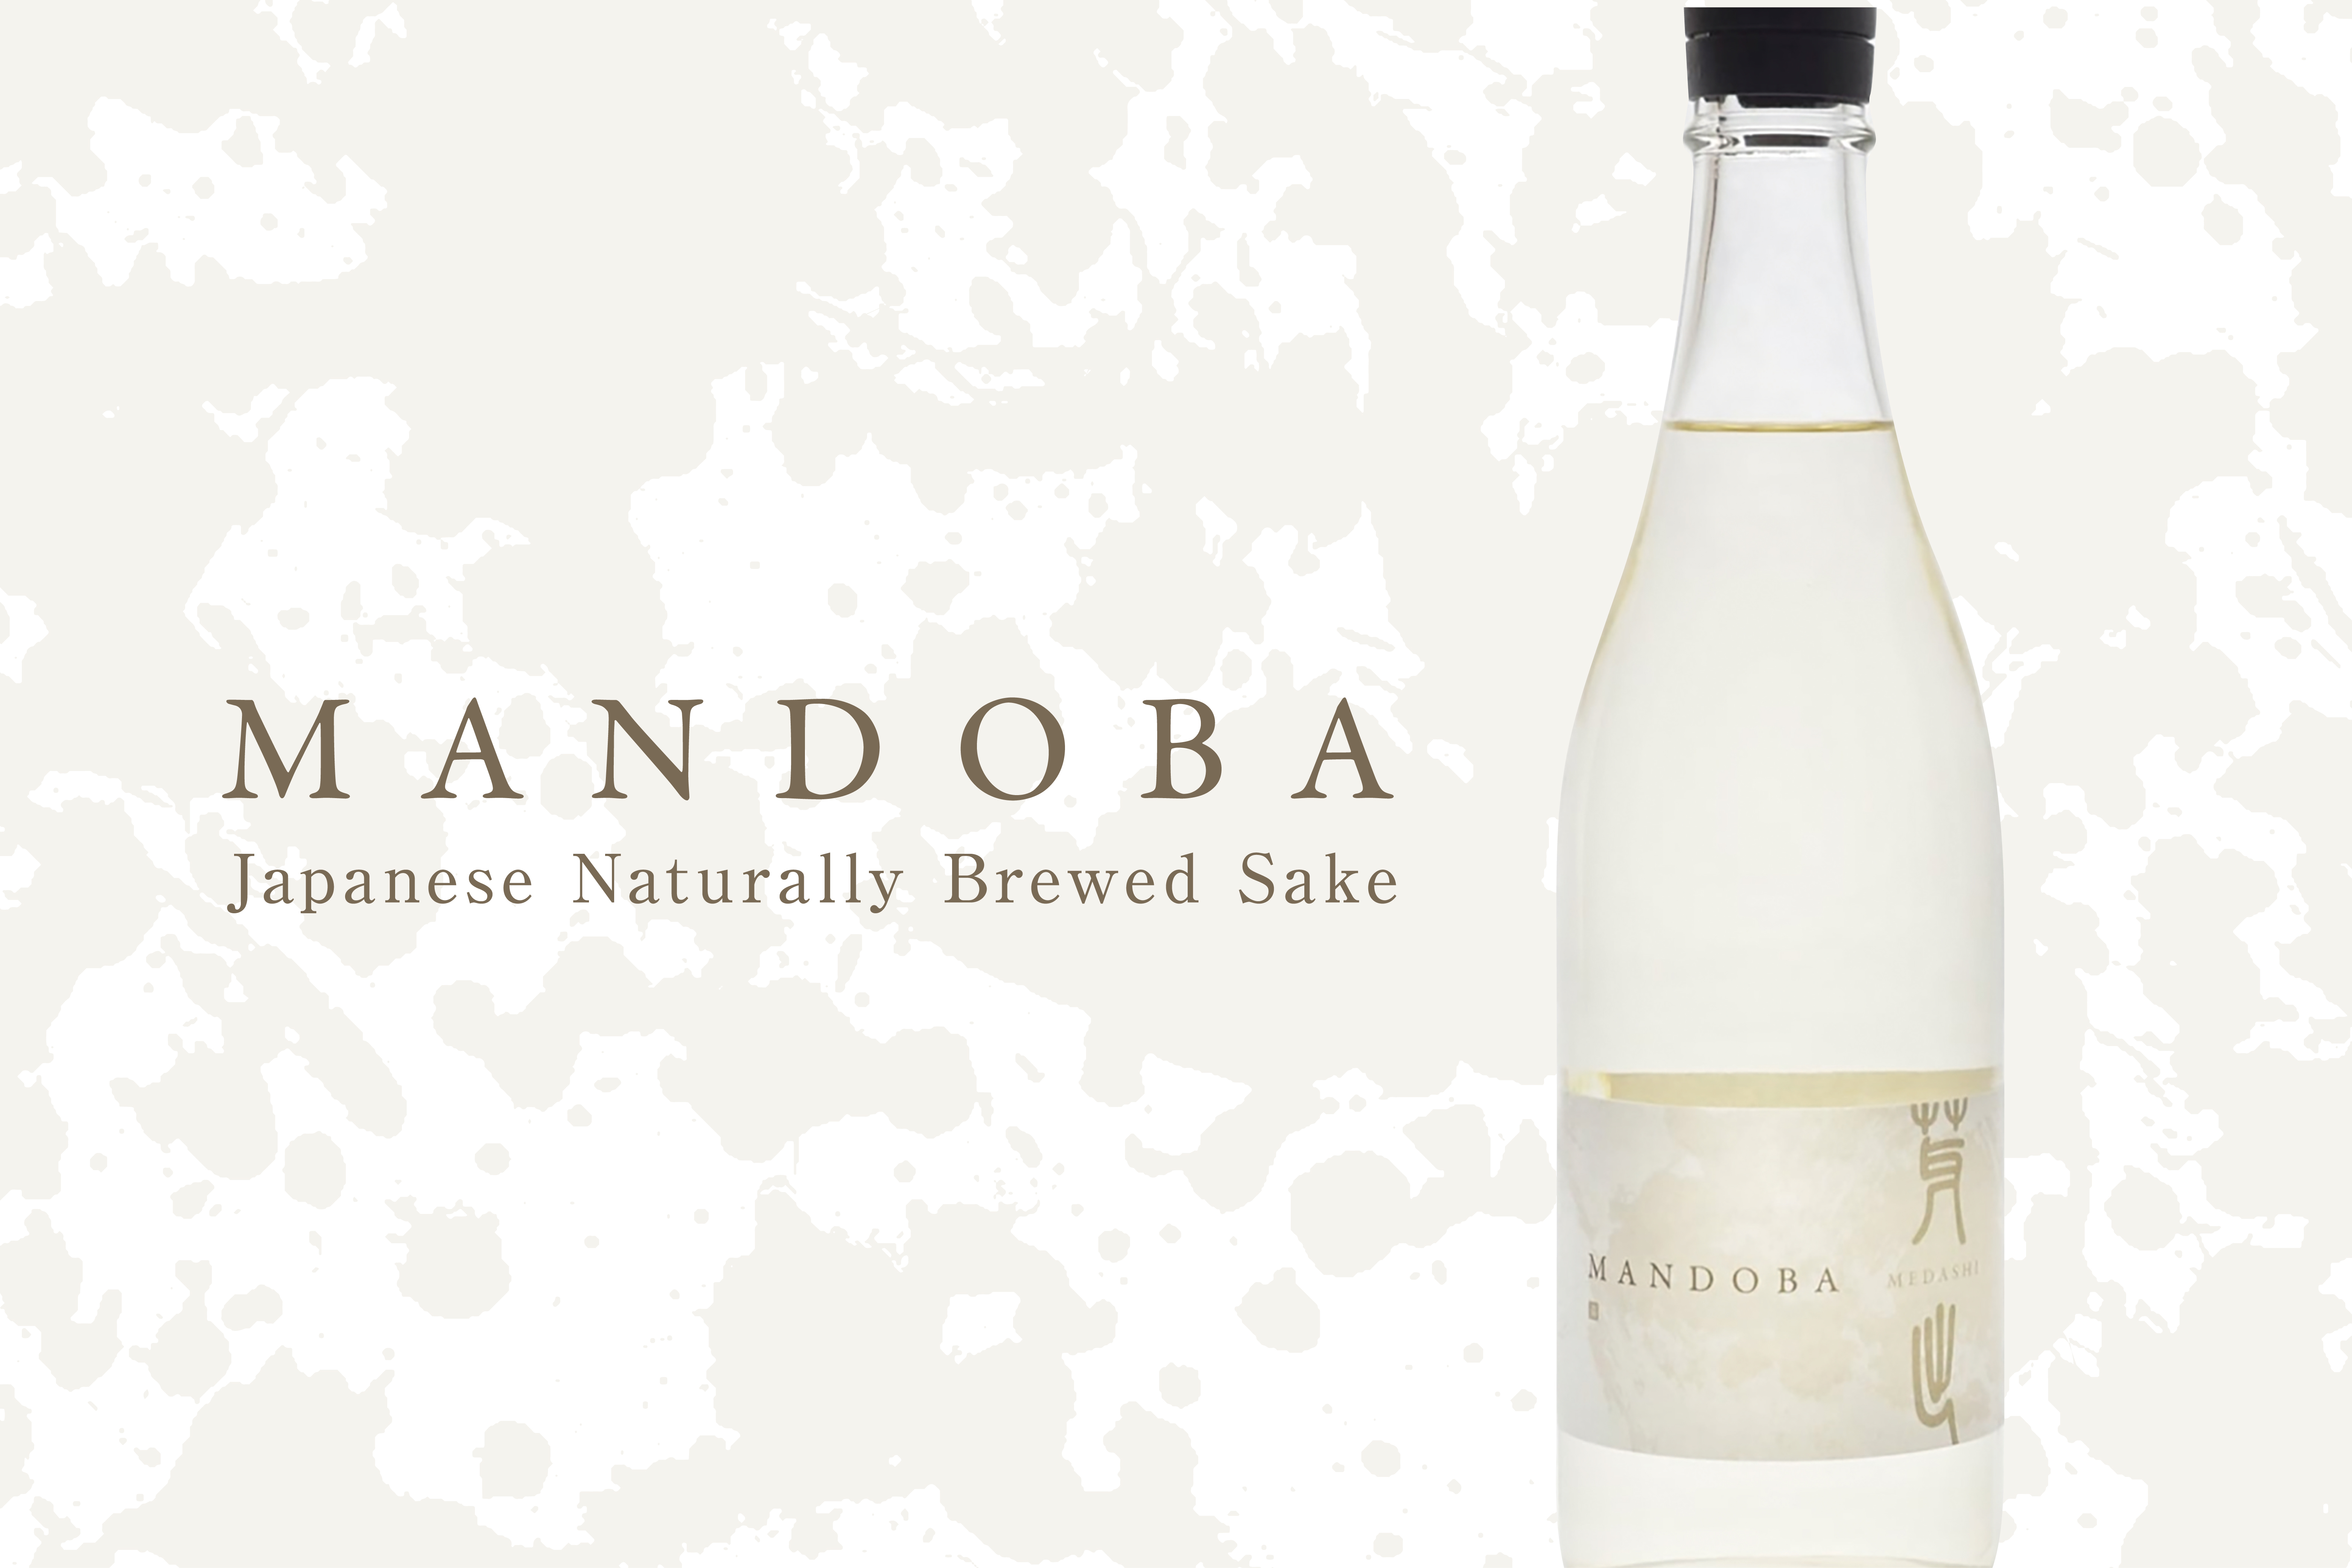 Japanese Naturally Brewed Sake “MANDOBA”